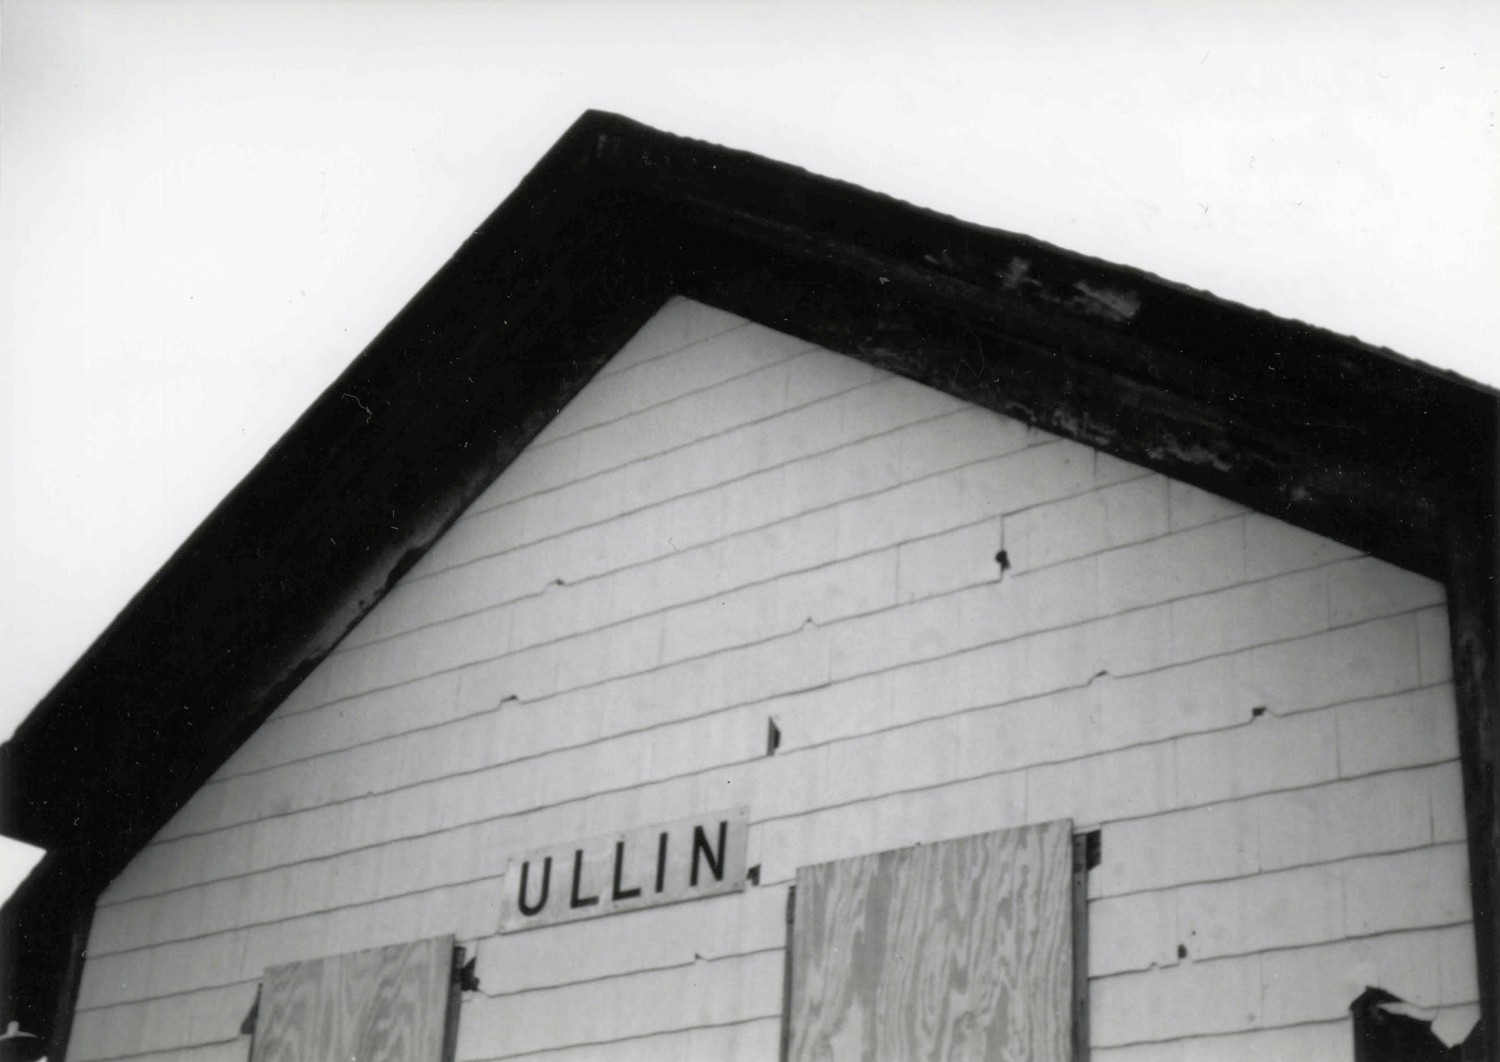 Illinois Central Railroad Depot, Ullin Illinois South gable (1998)